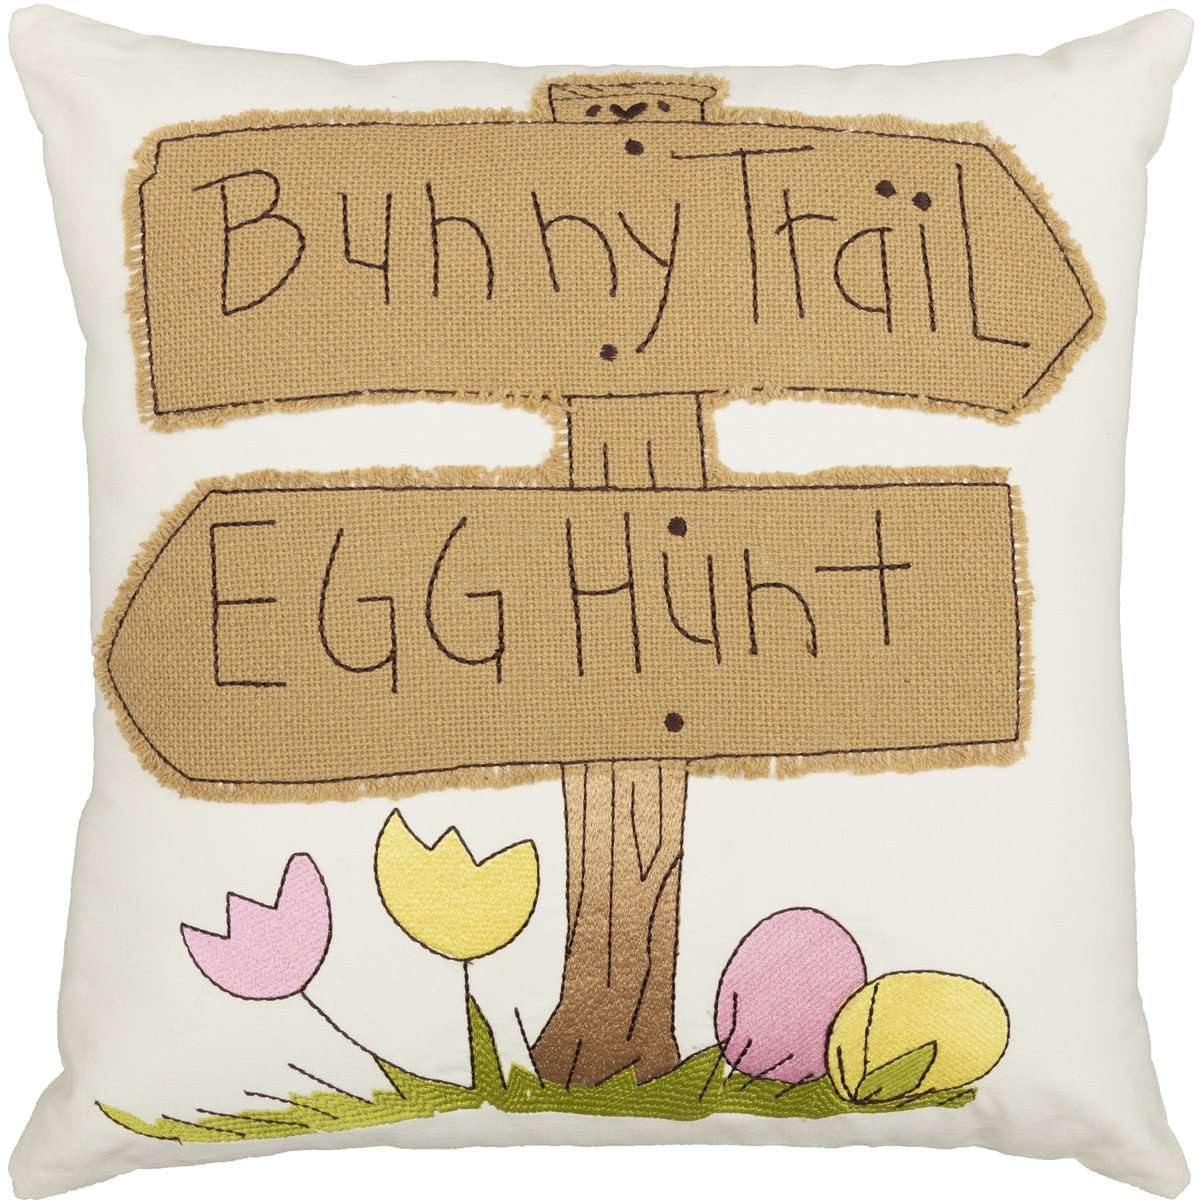 Bunny Trail Pillow 18x18 - The Fox Decor